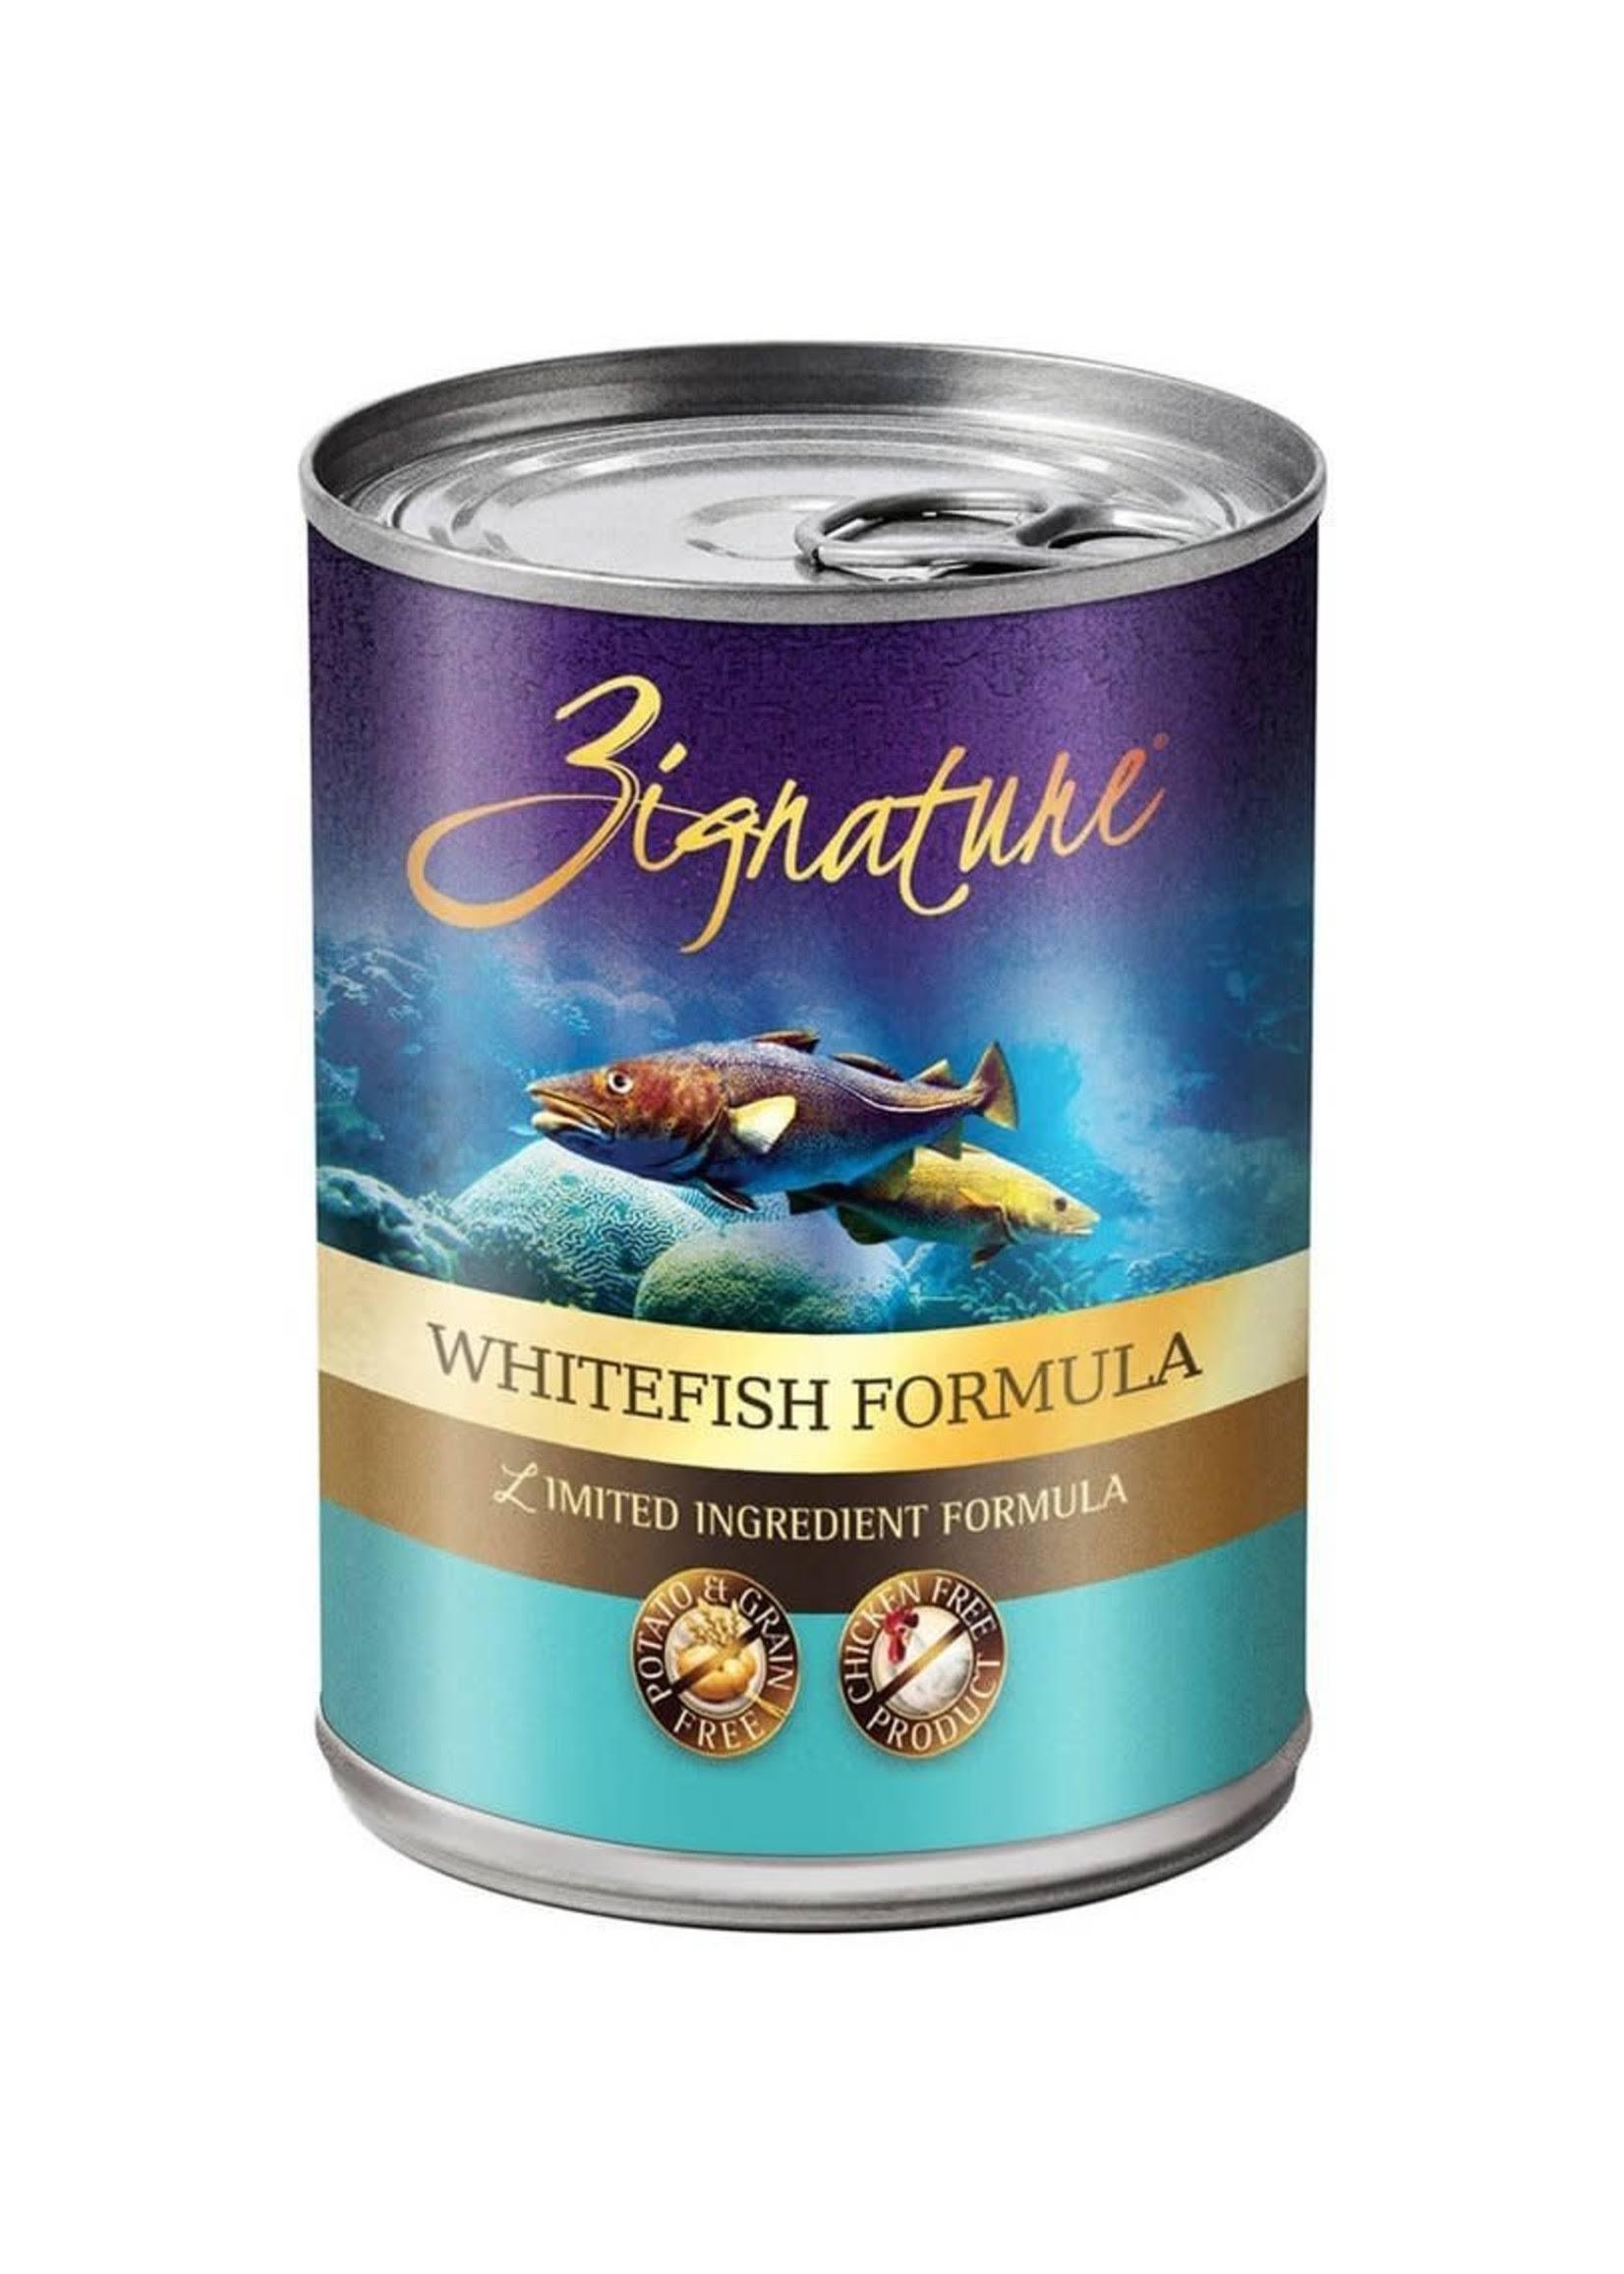 Zignature Limited Ingredient Grain Free Whitefish Dog Food 13Oz